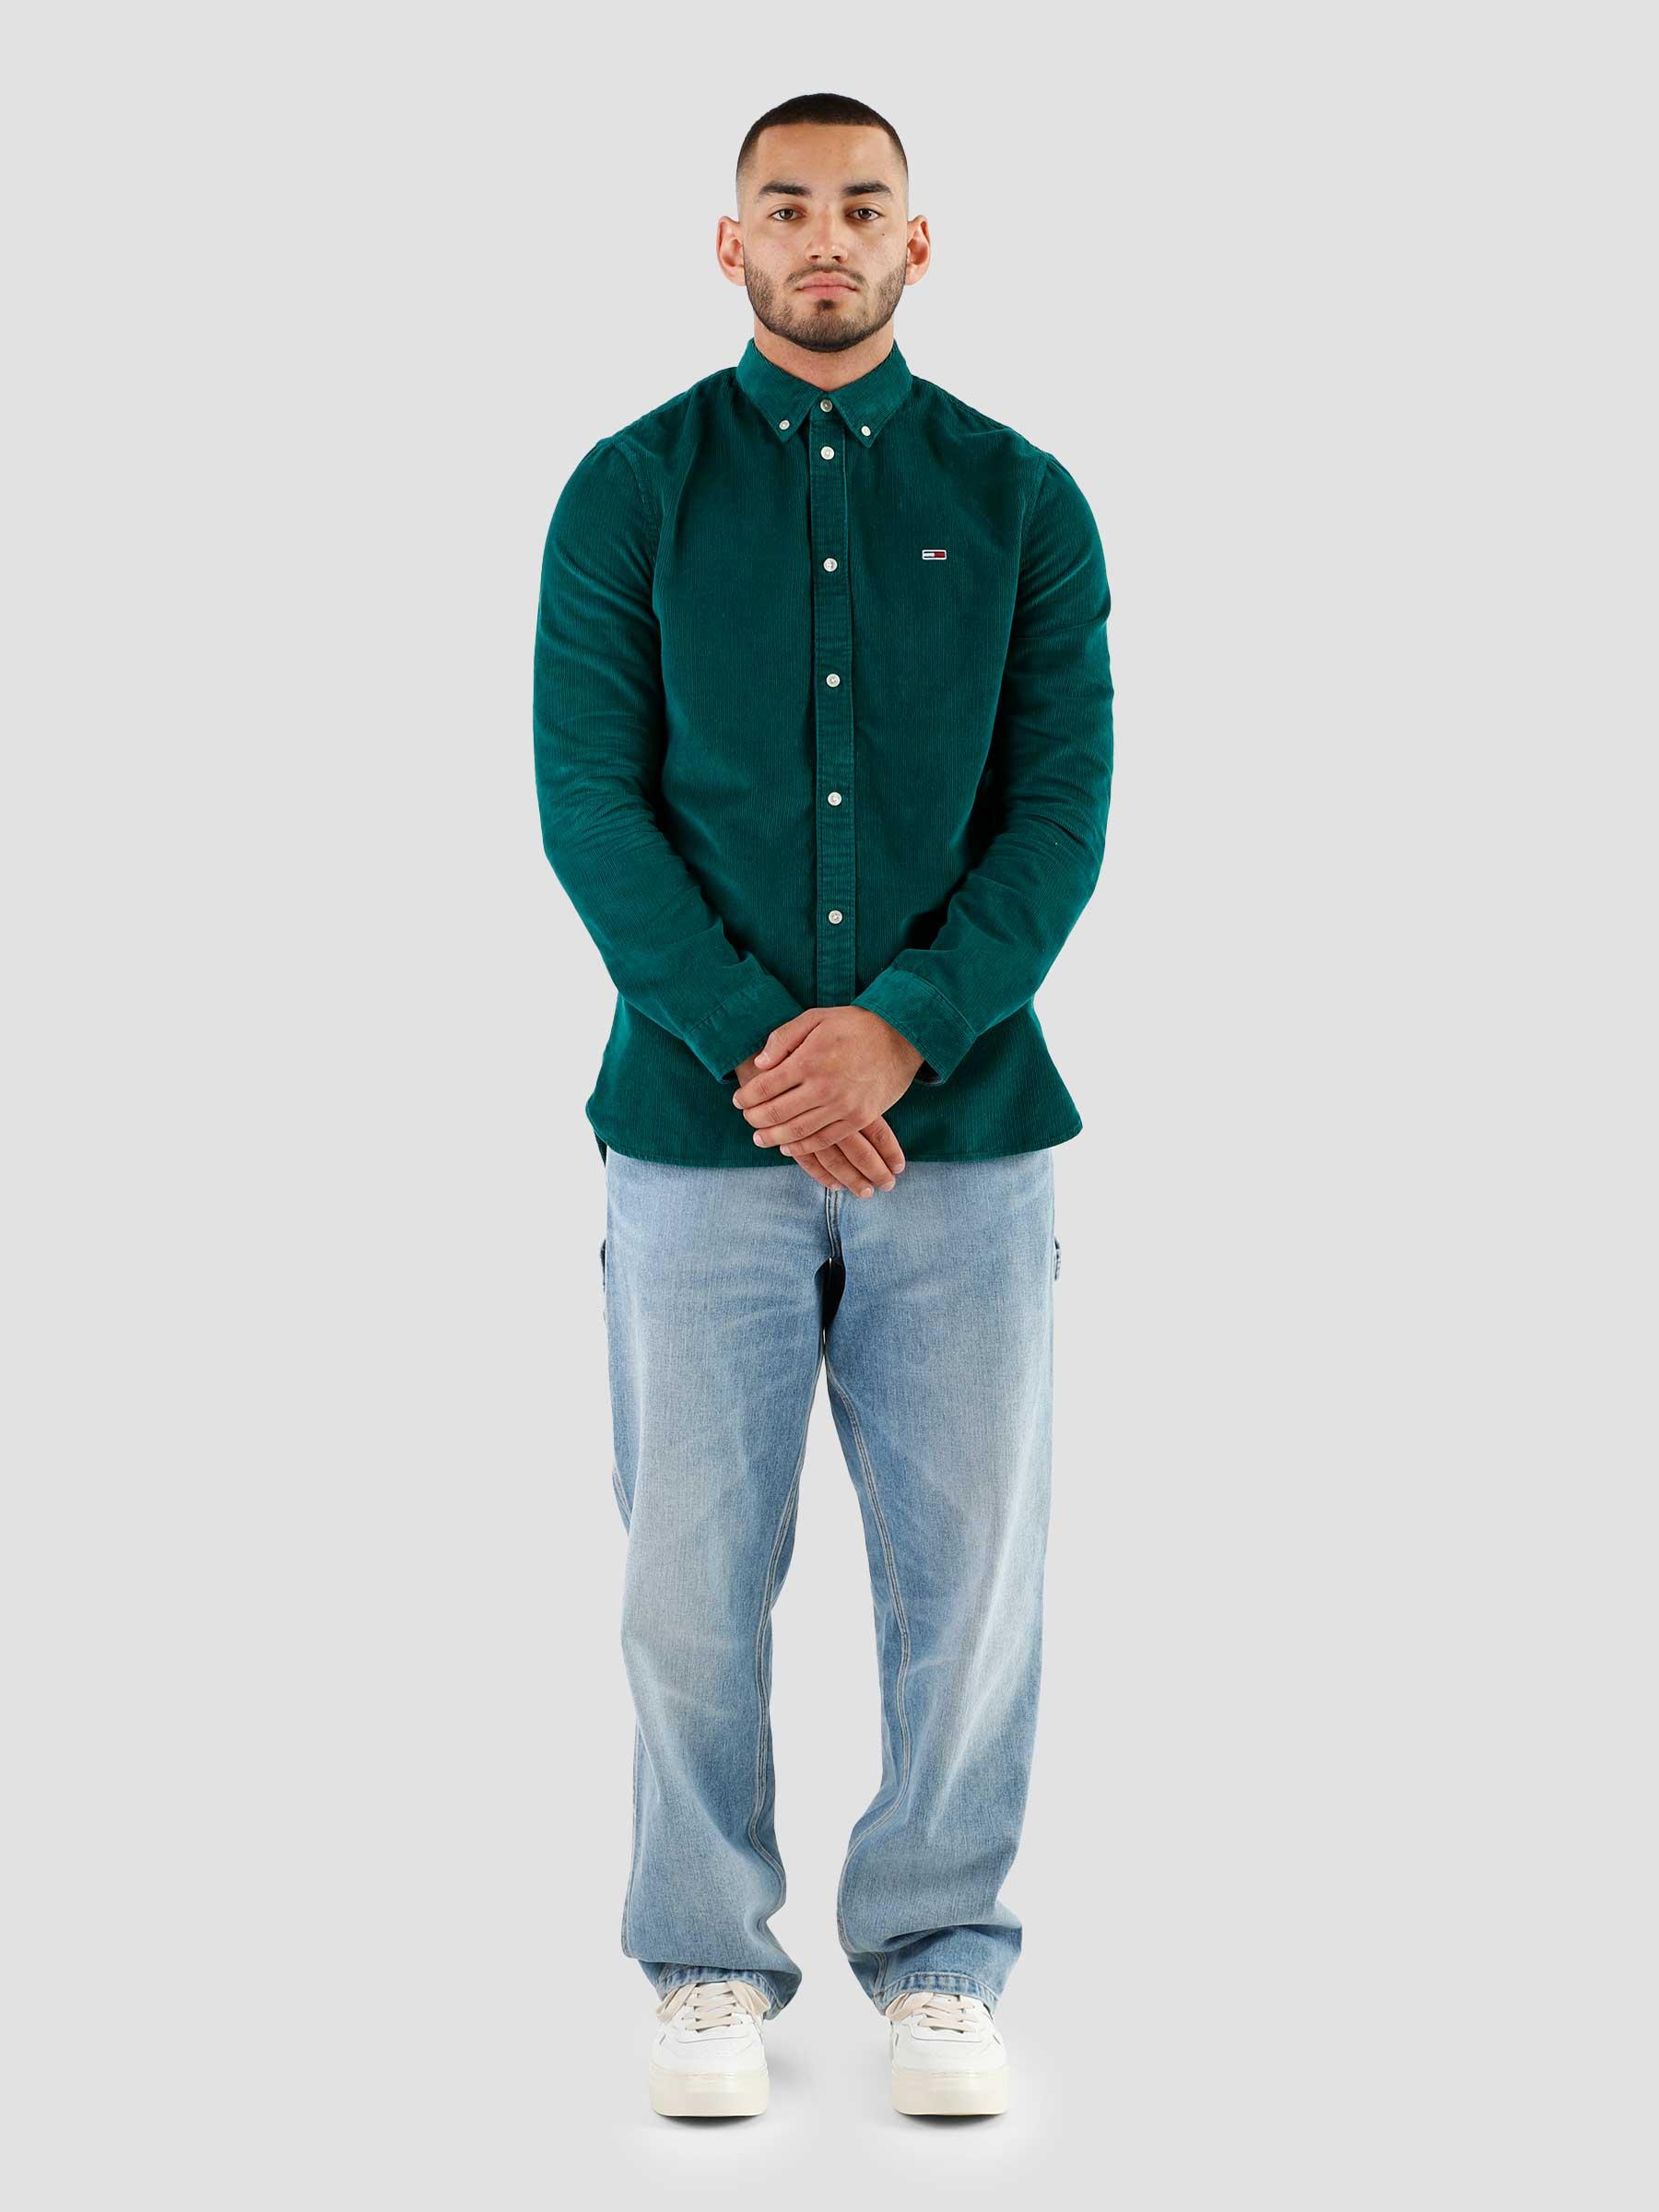 Dark Shirt Turf Tommy Jeans - Freshcotton Solid Green TJM Cord